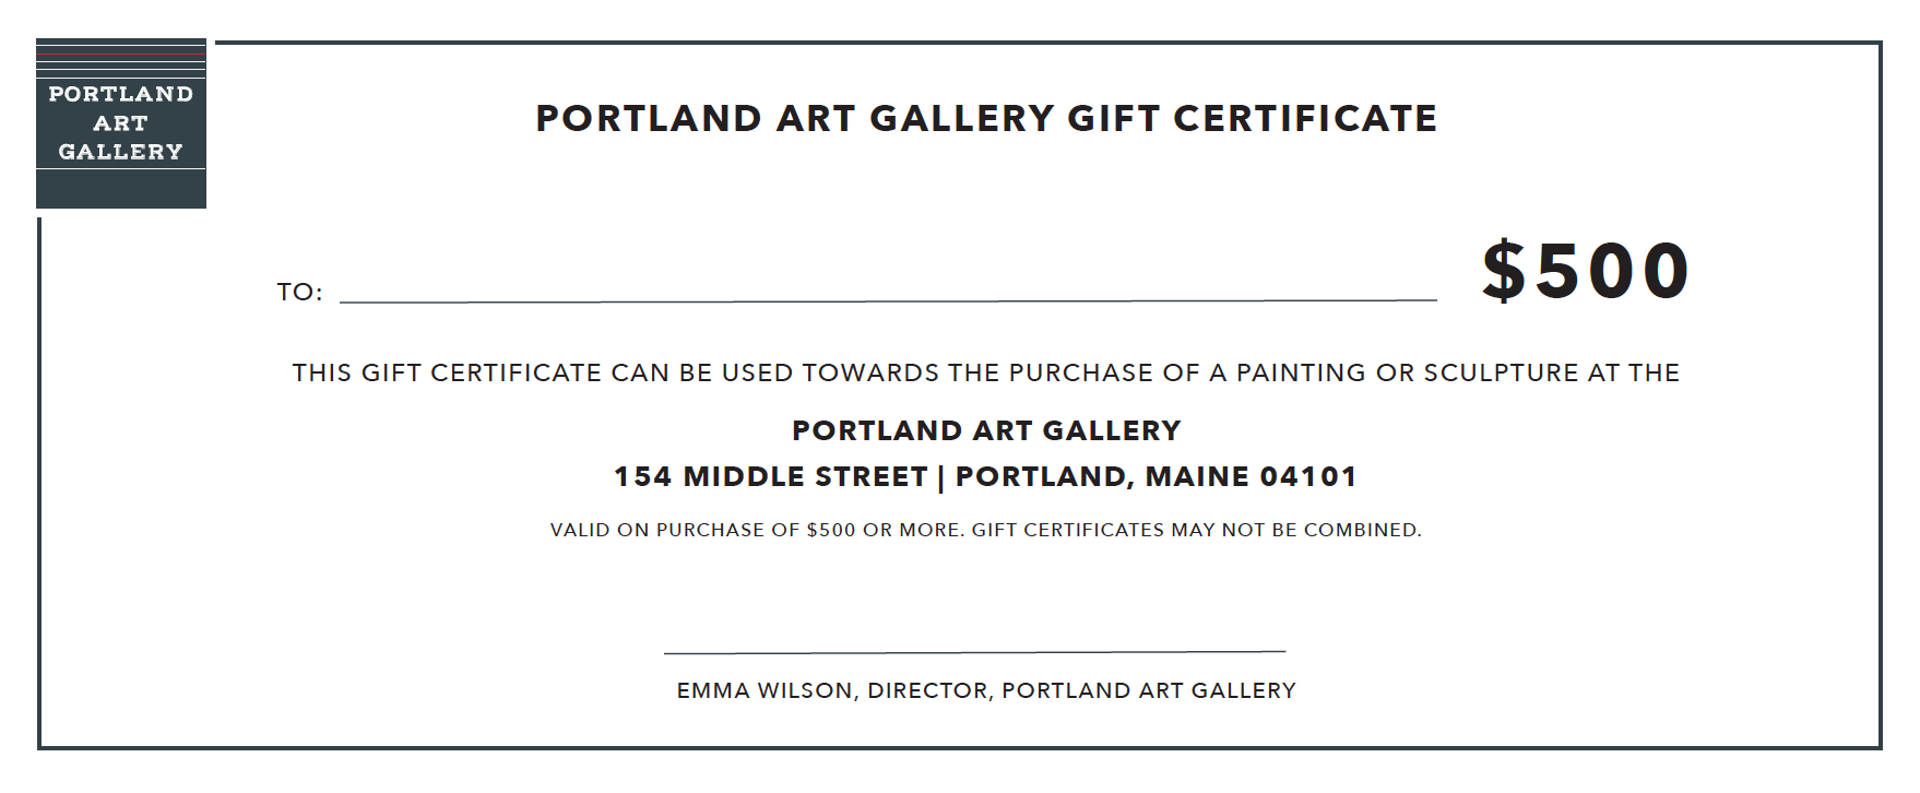 Portland Art Gallery Gift Certificate $500